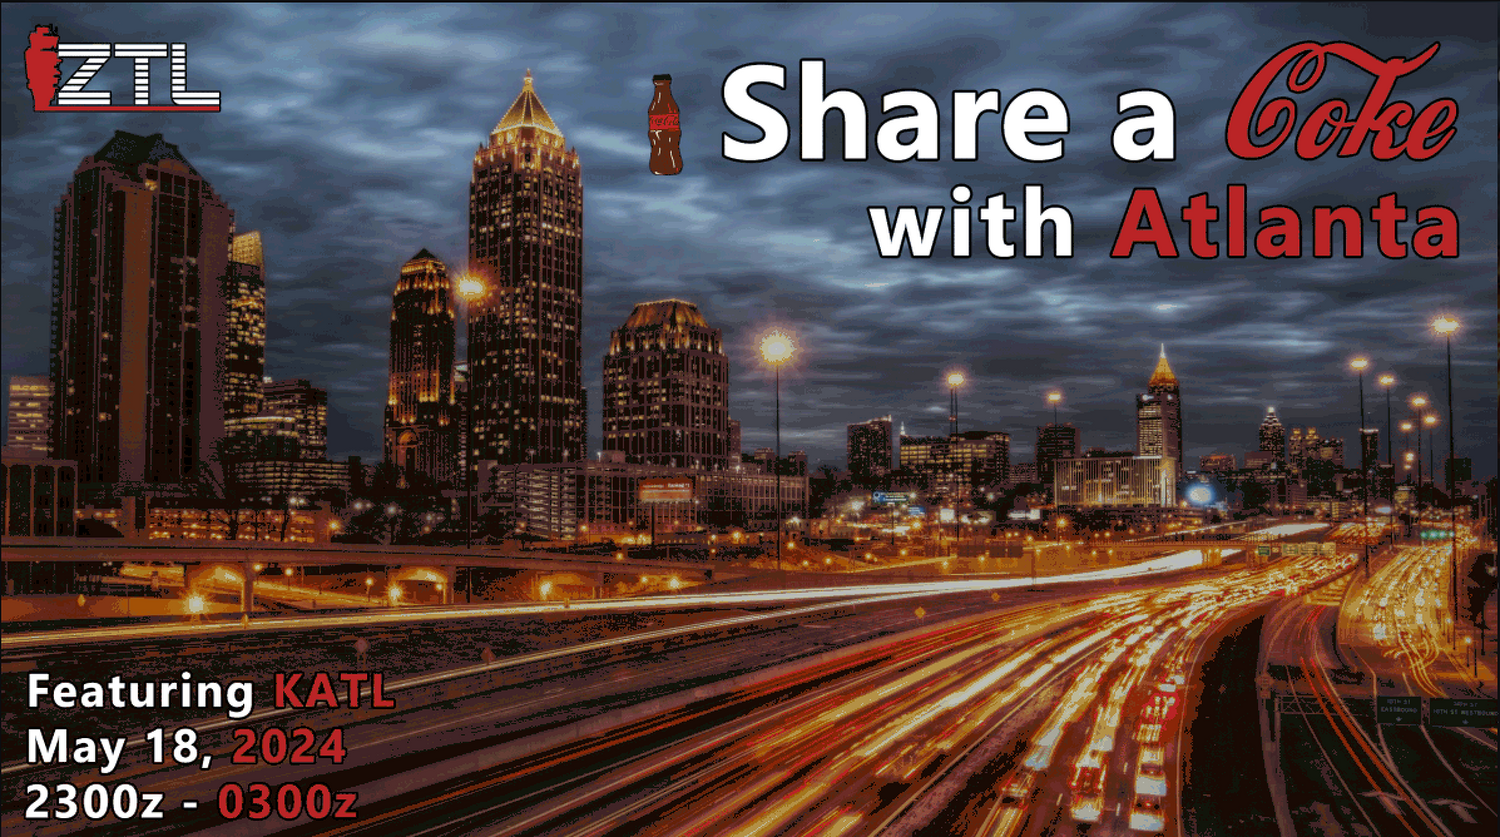 Share a Coke with Atlanta